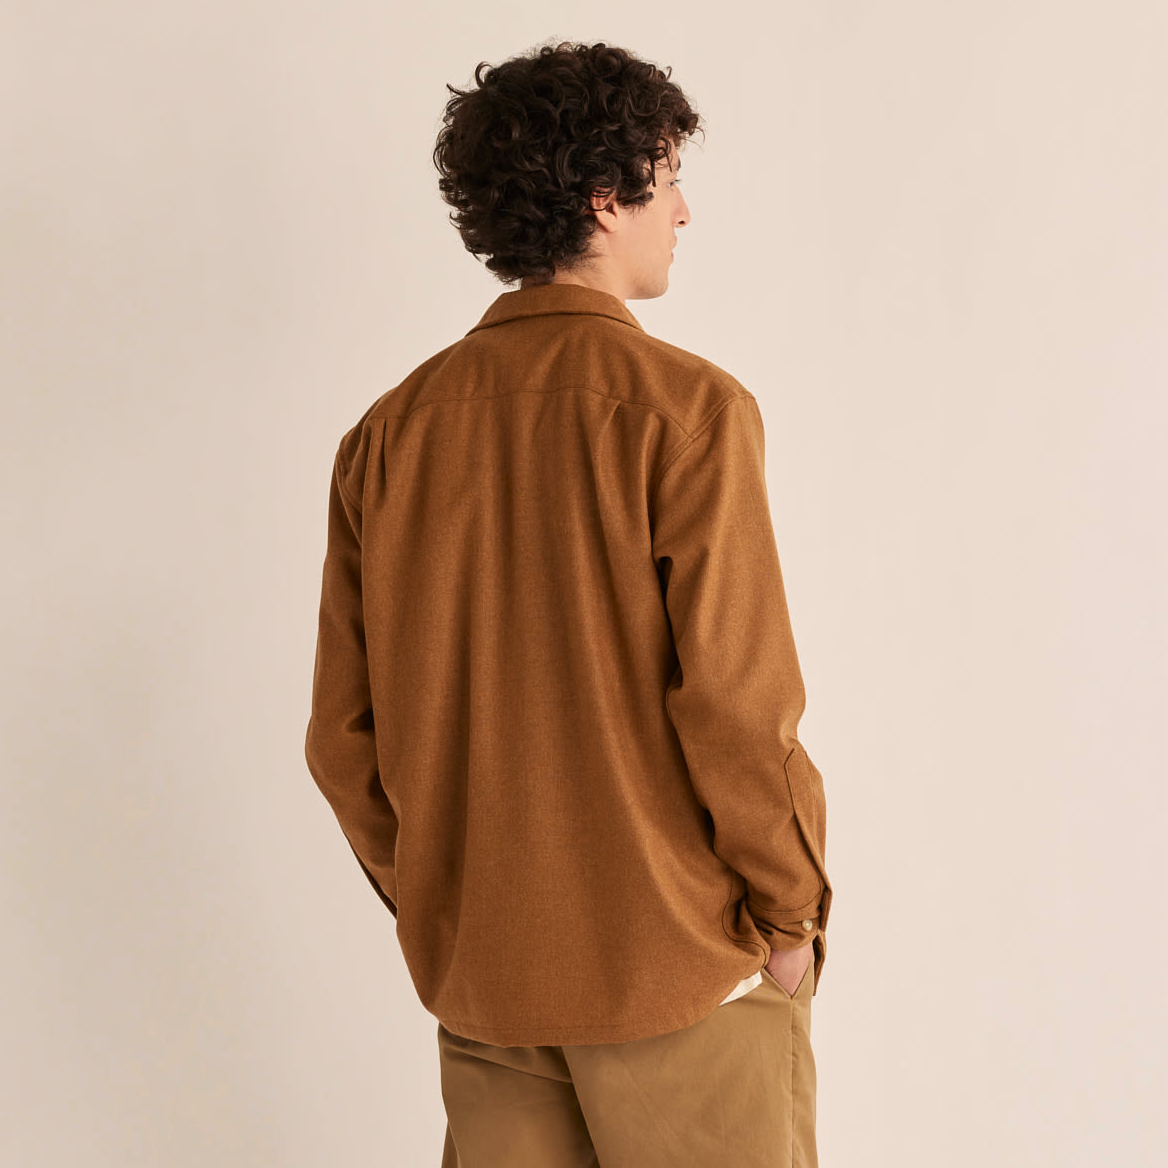 Pendleton Men's Board Shirt - Camel Mix Solid